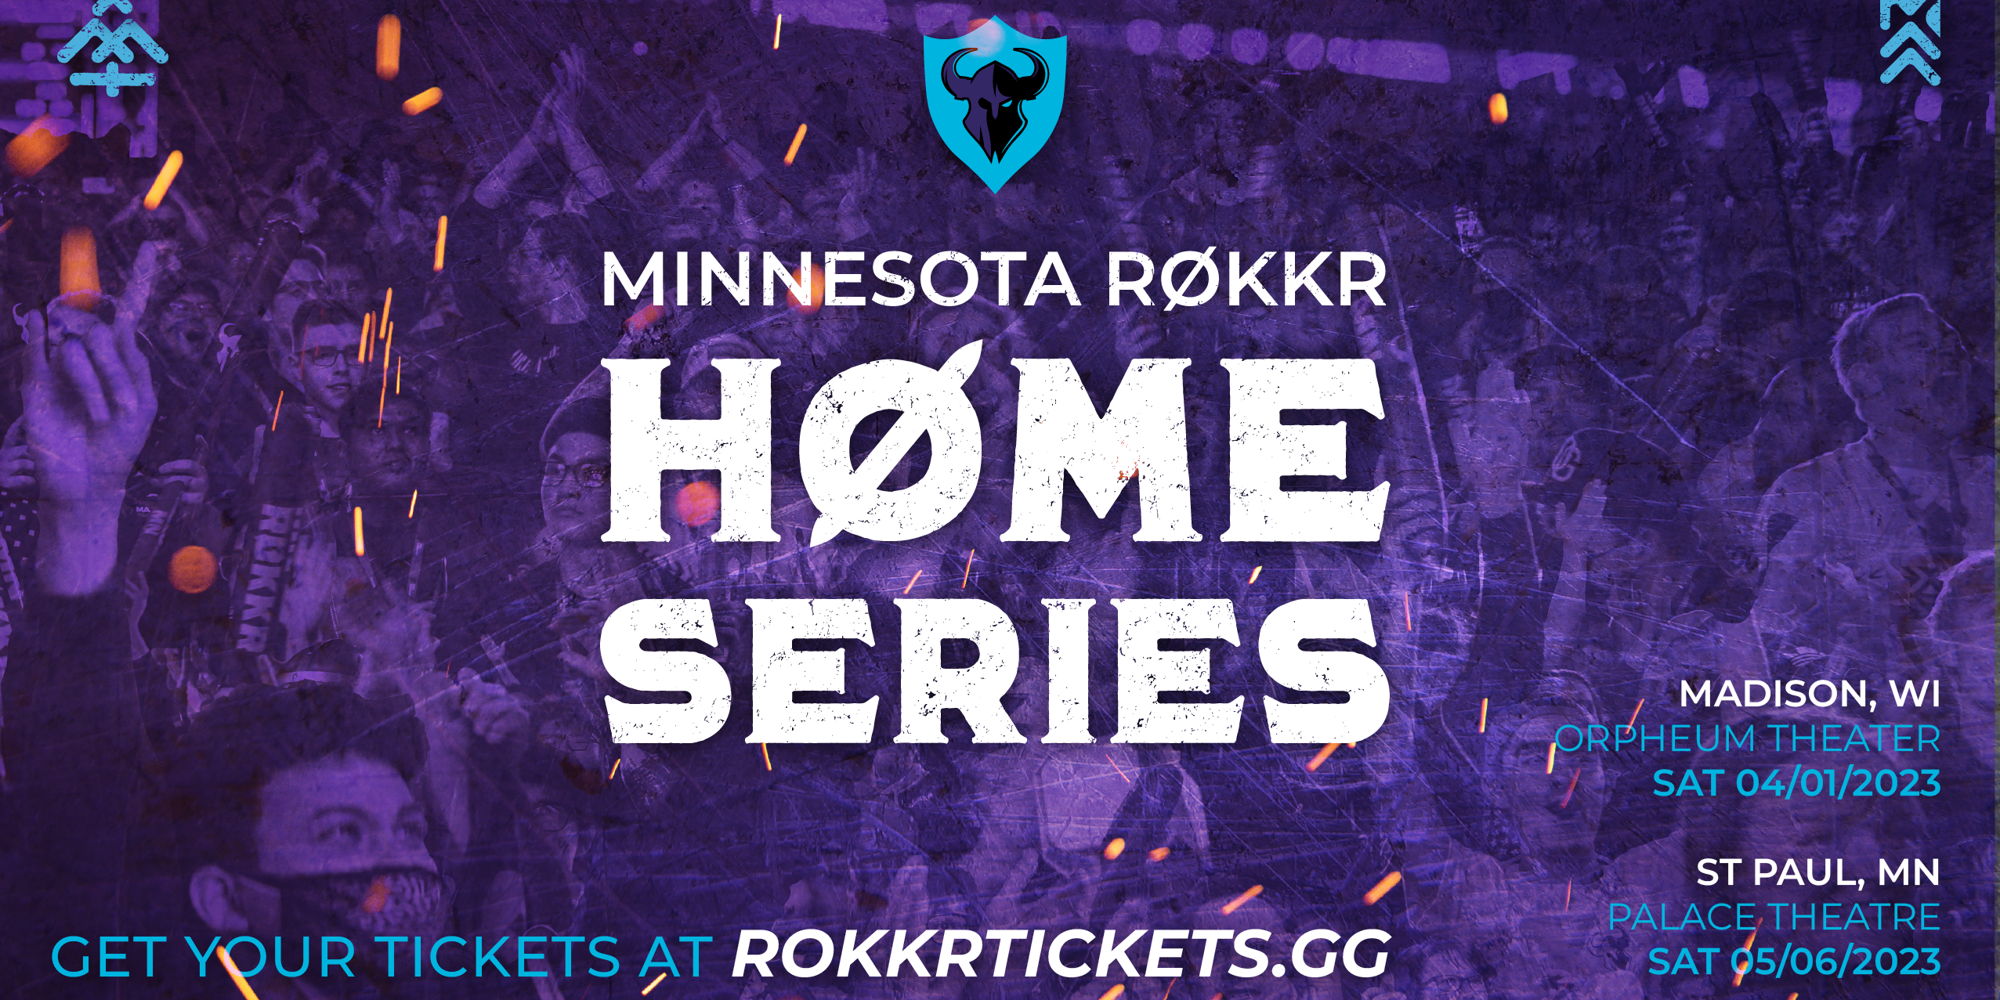 Minnesota Røkkr Home Series - Madison, Wisconsin promotional image